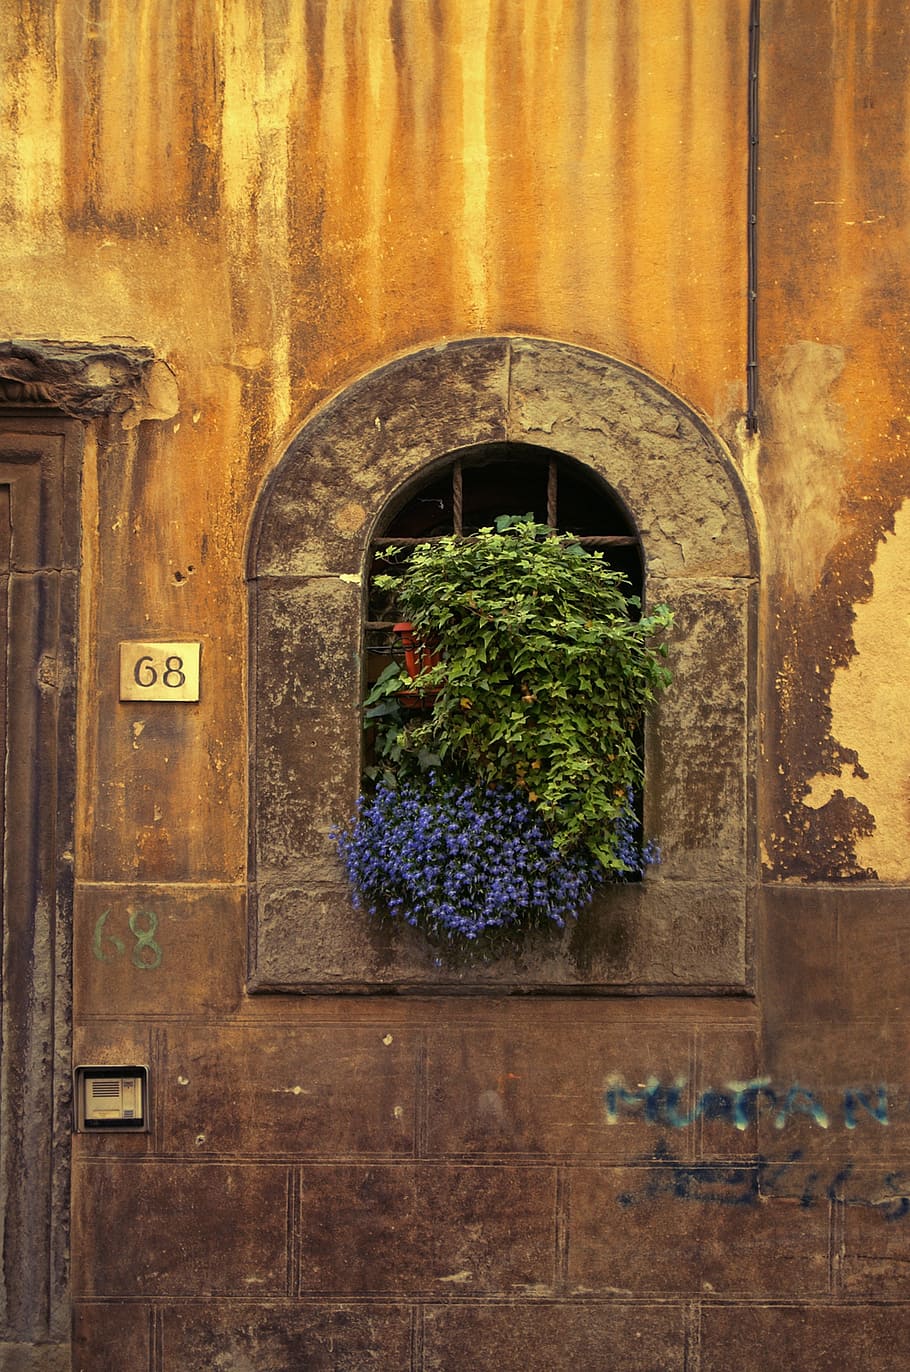 verde, azul, planta, janela, parede, parede de pedra, arco redondo, fachada, plano de fundo, paredes